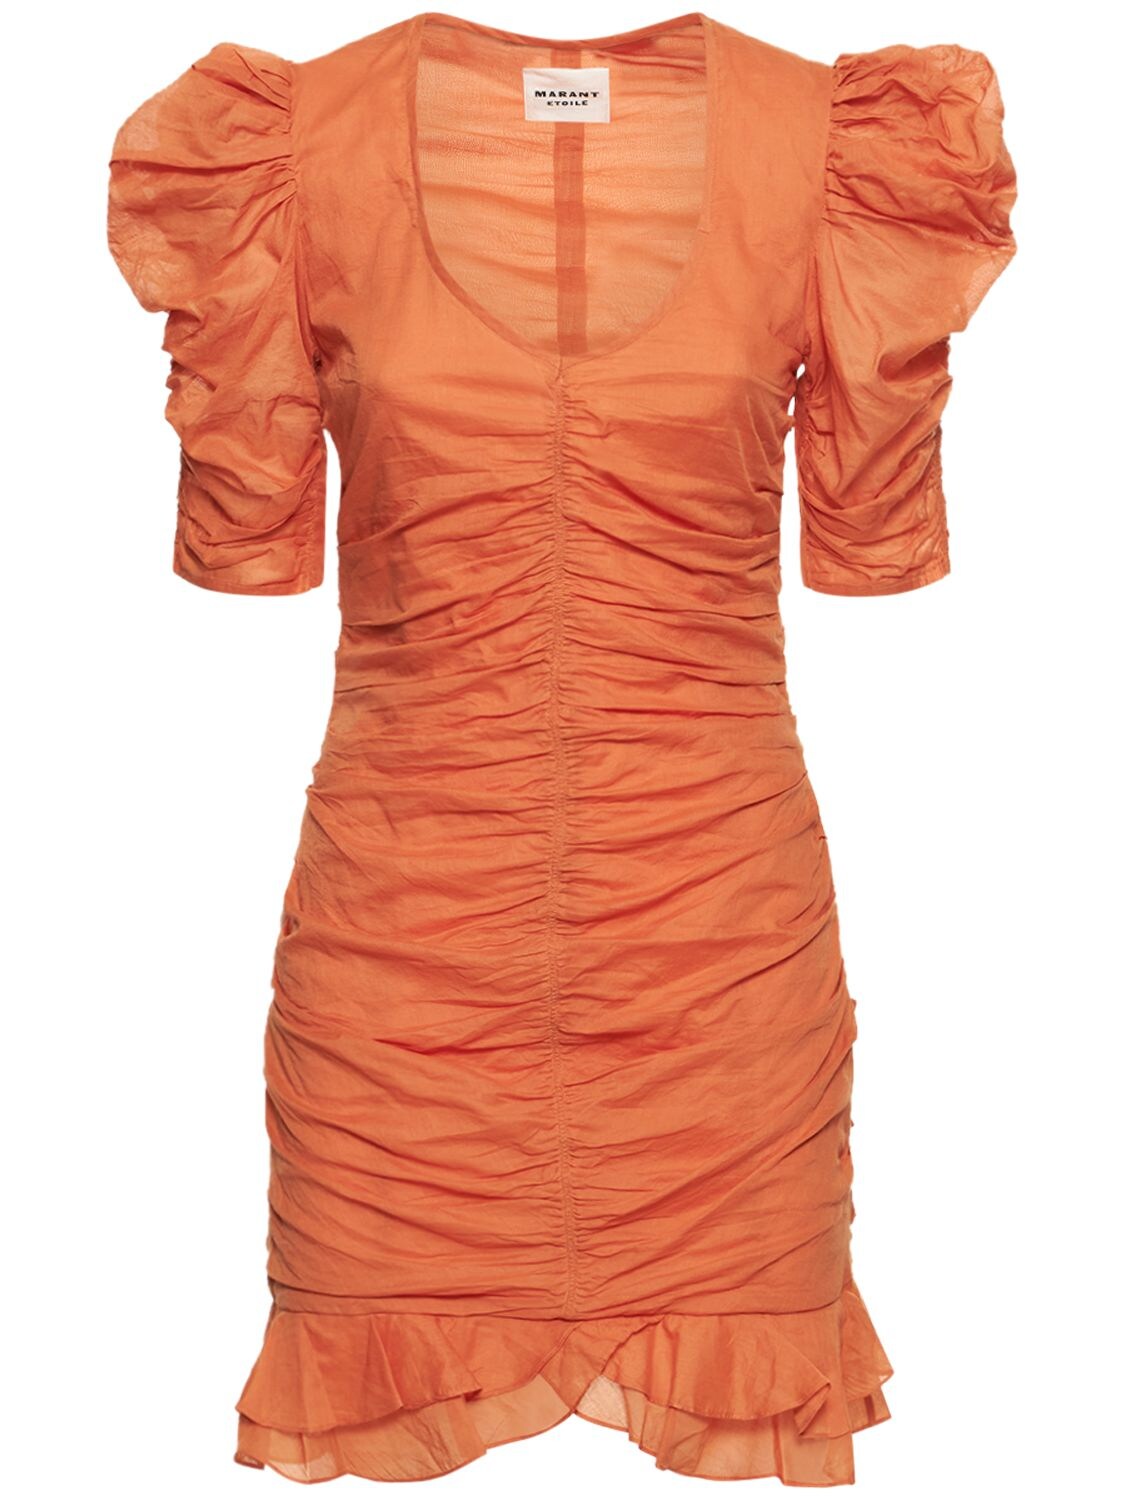 Robe Courte En Voile De Coton Sireny - MARANT ETOILE - Modalova